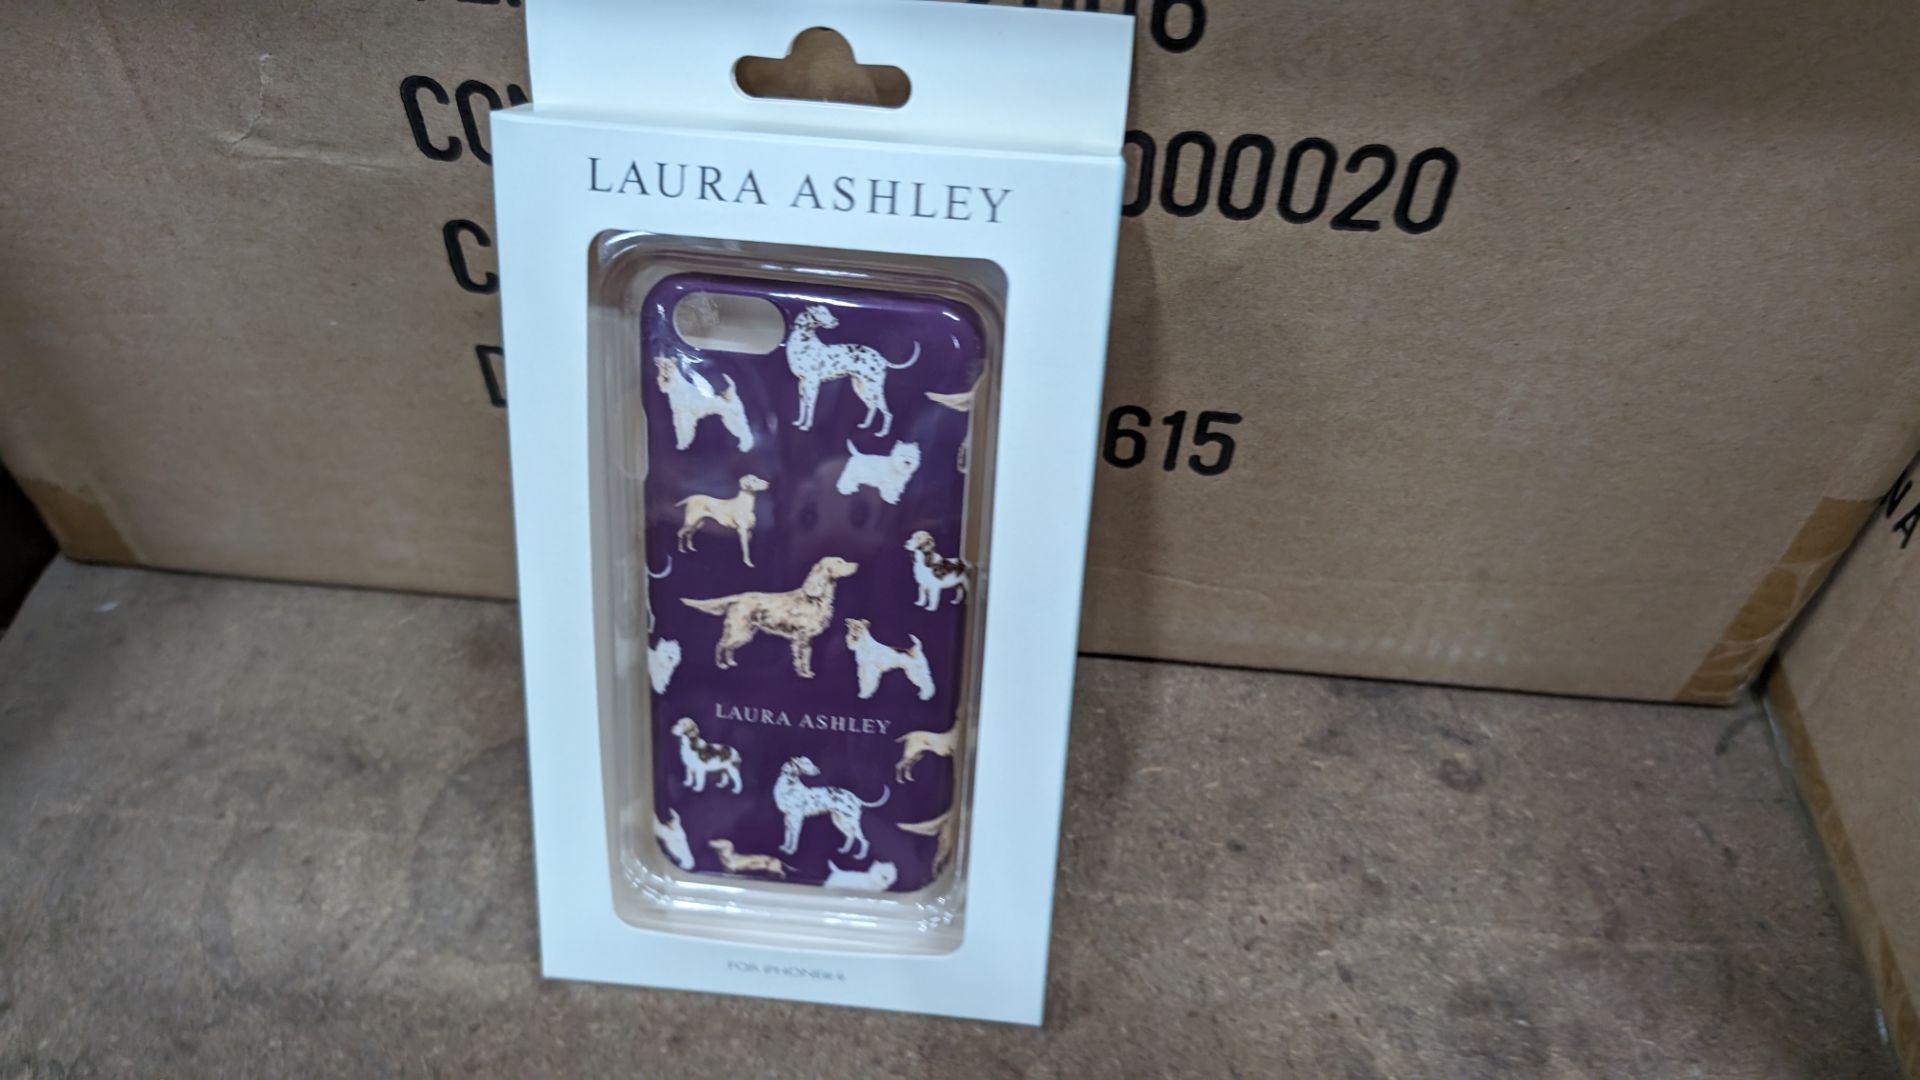 160 off Laura Ashley iPhone 6 covers, design LA2006 (2 cartons)